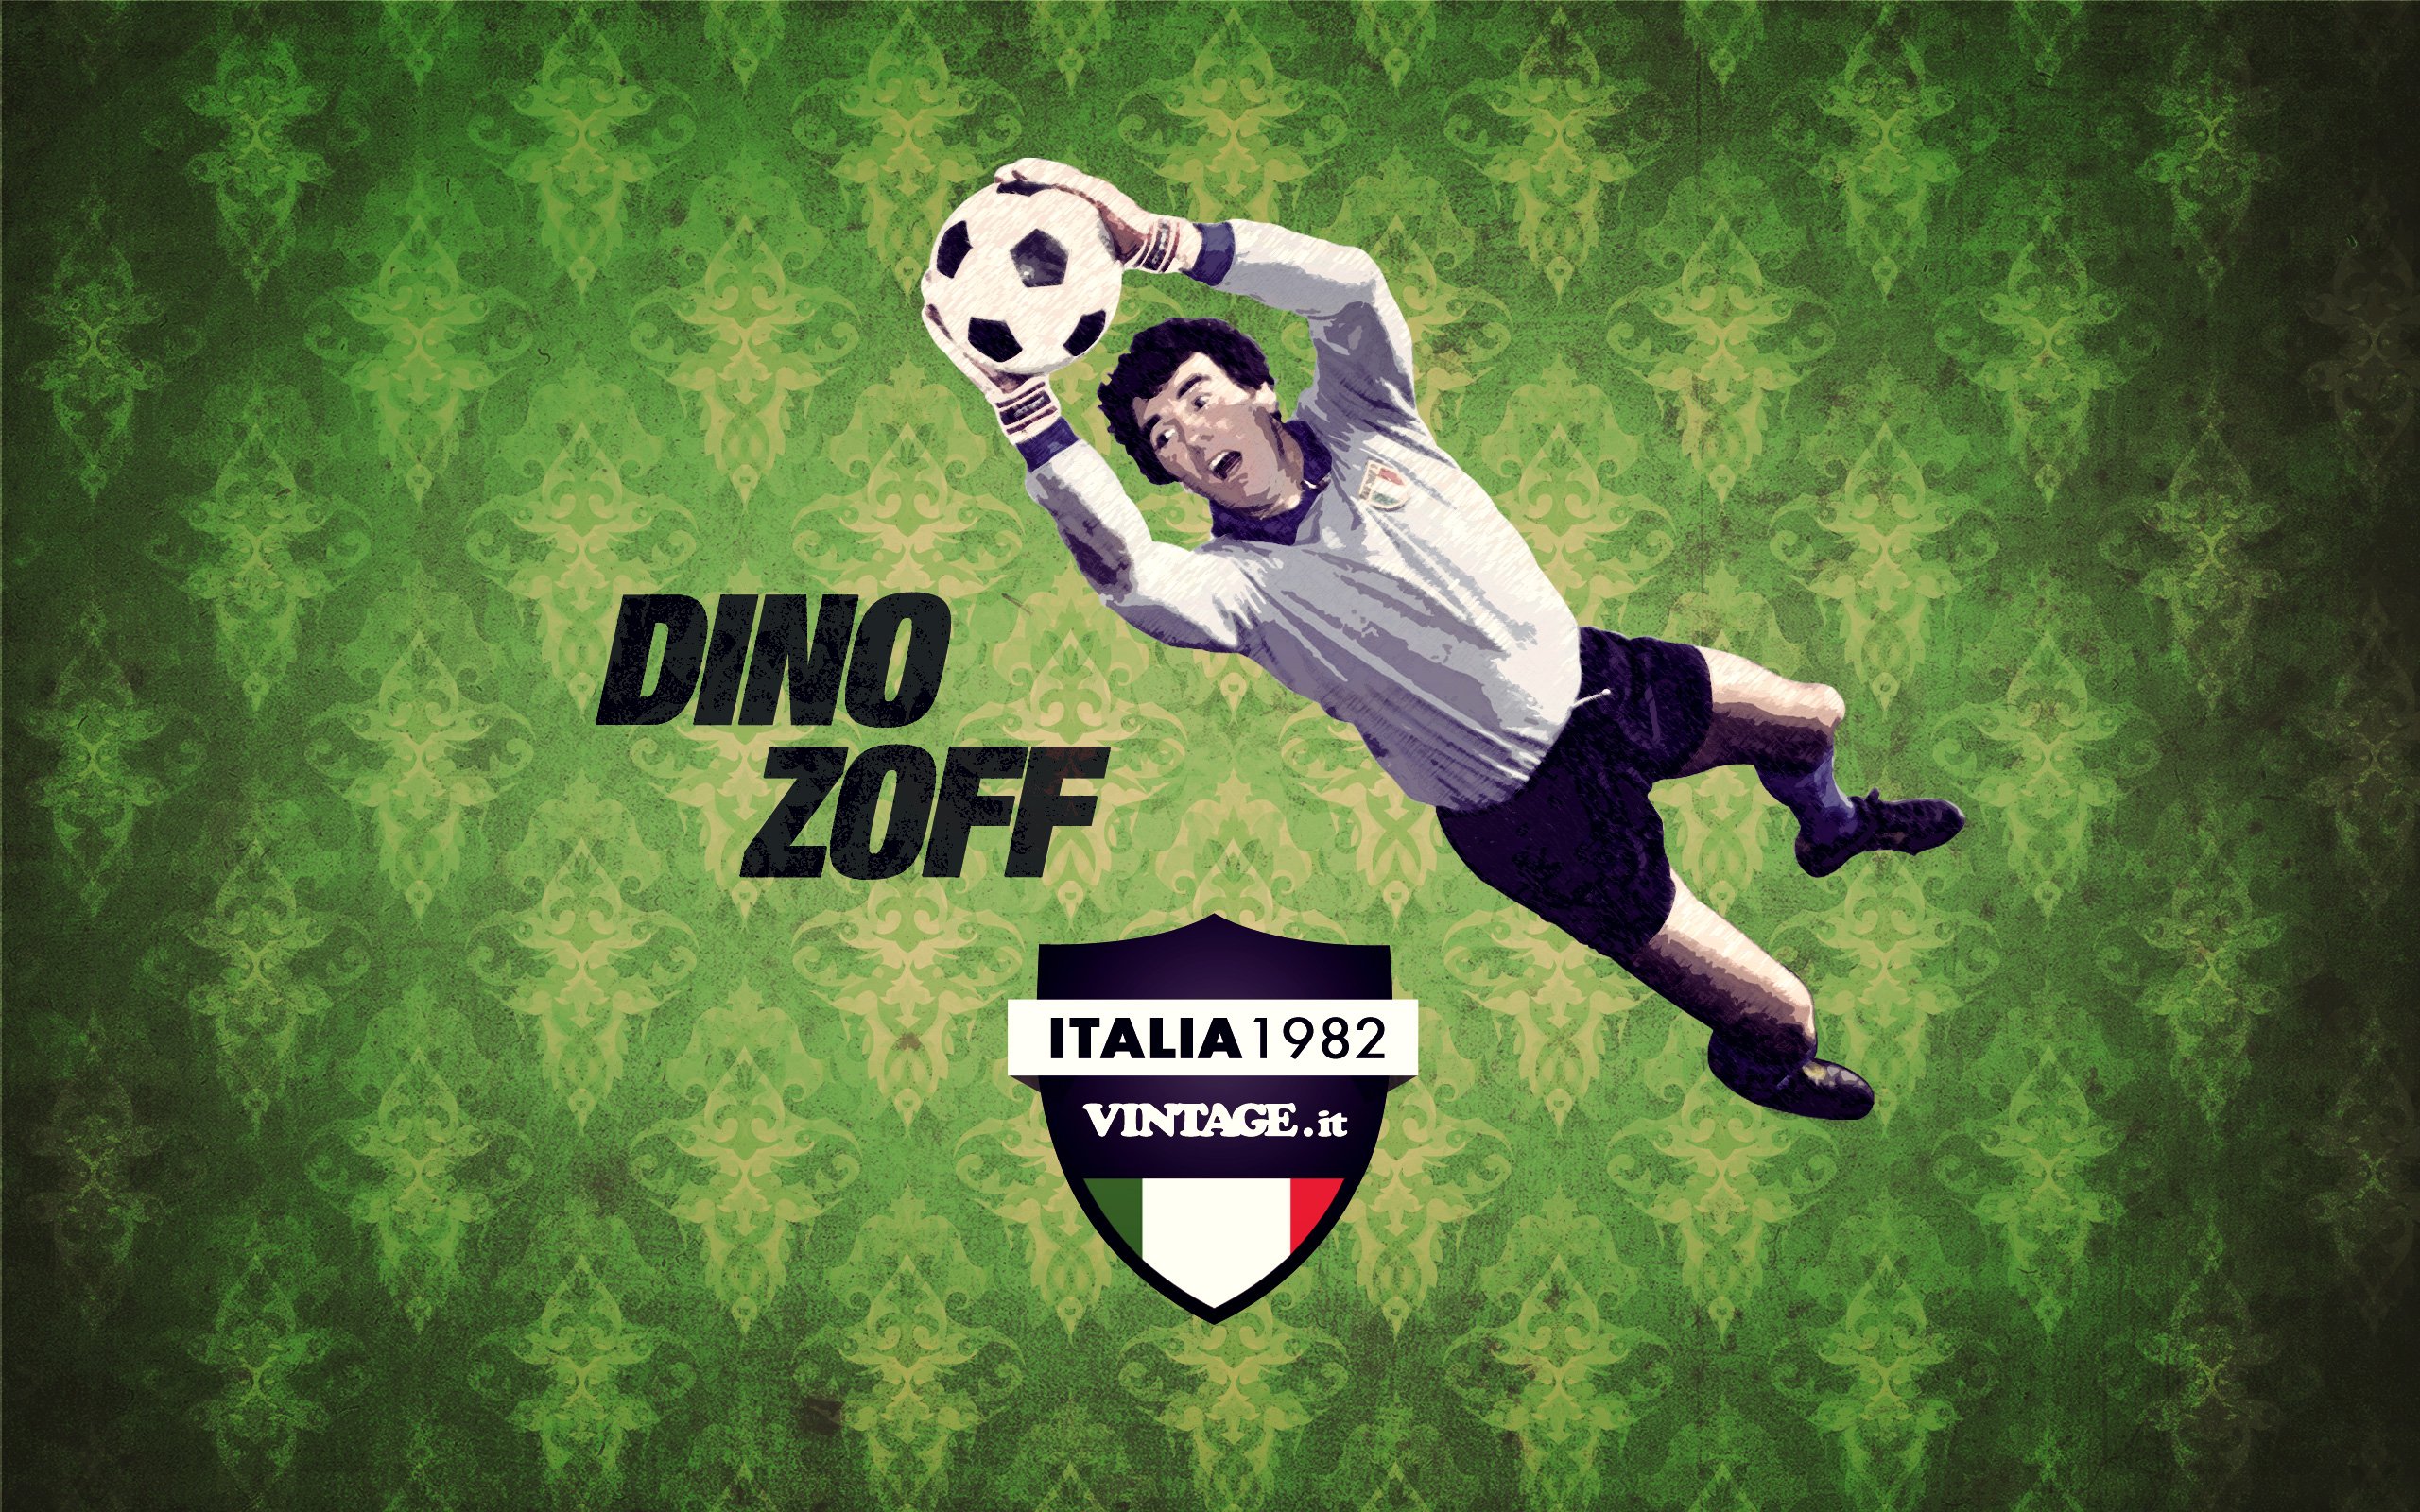 Dino Zoff wallpaper (campioni collection) Desktop HD iPad iPhone wallpaper